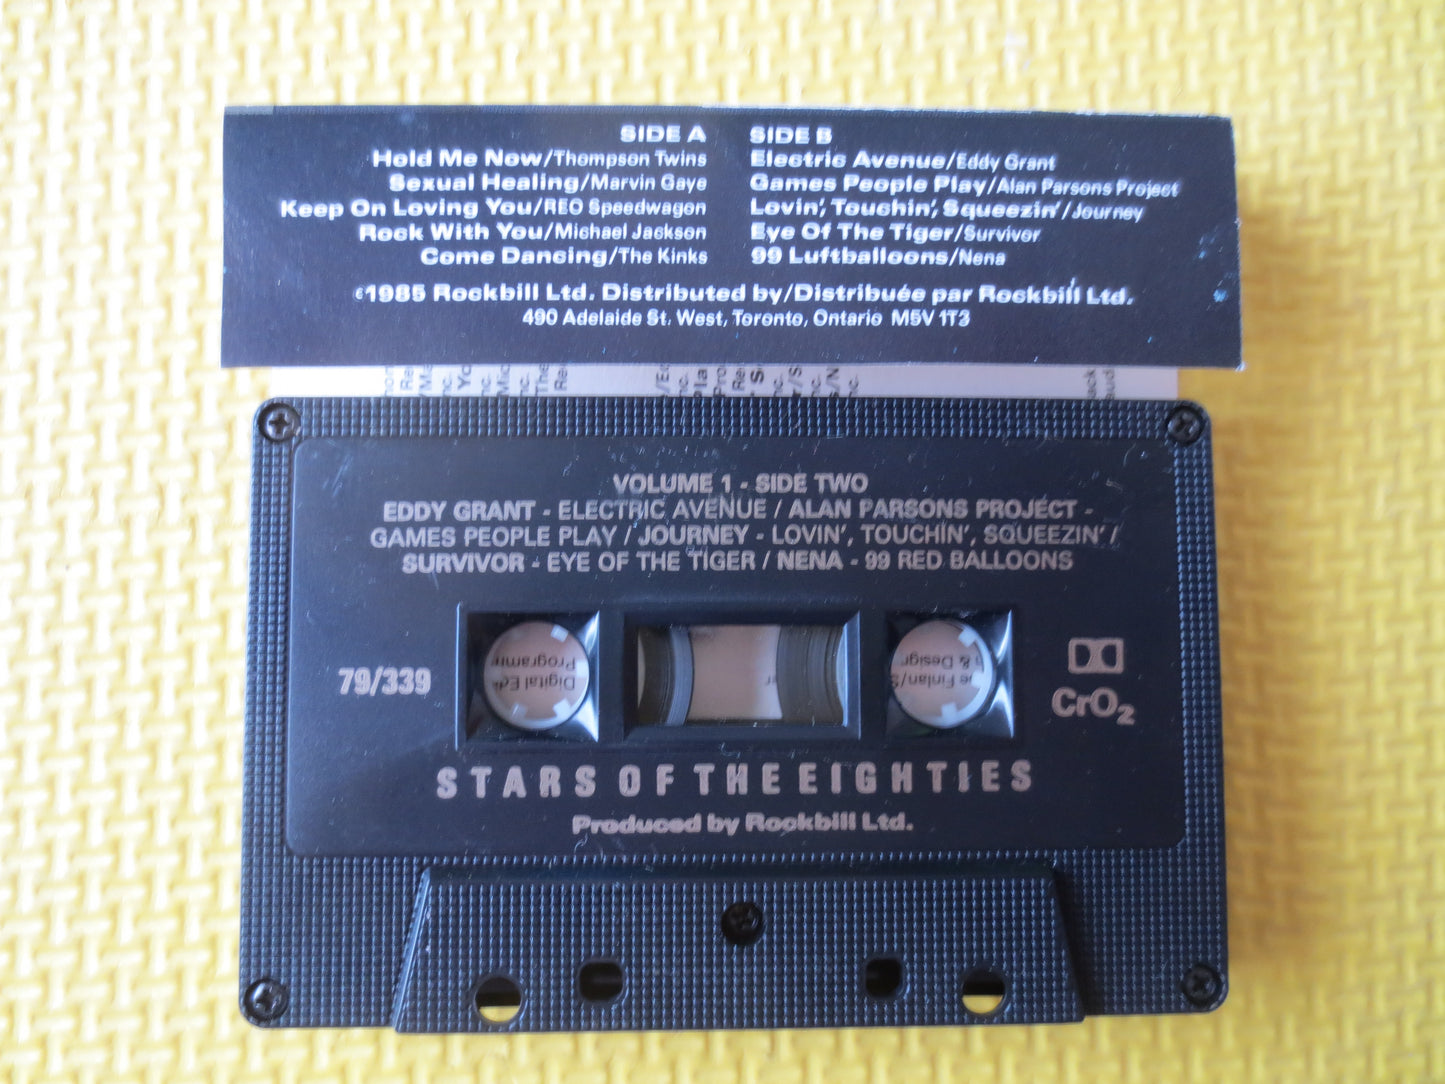 STARS of the EIGHTIES, Volume 1, 80s Tape, 80s Cassette Music, Tape Cassette, Music Cassette, Pop Cassette, 1985 Cassette